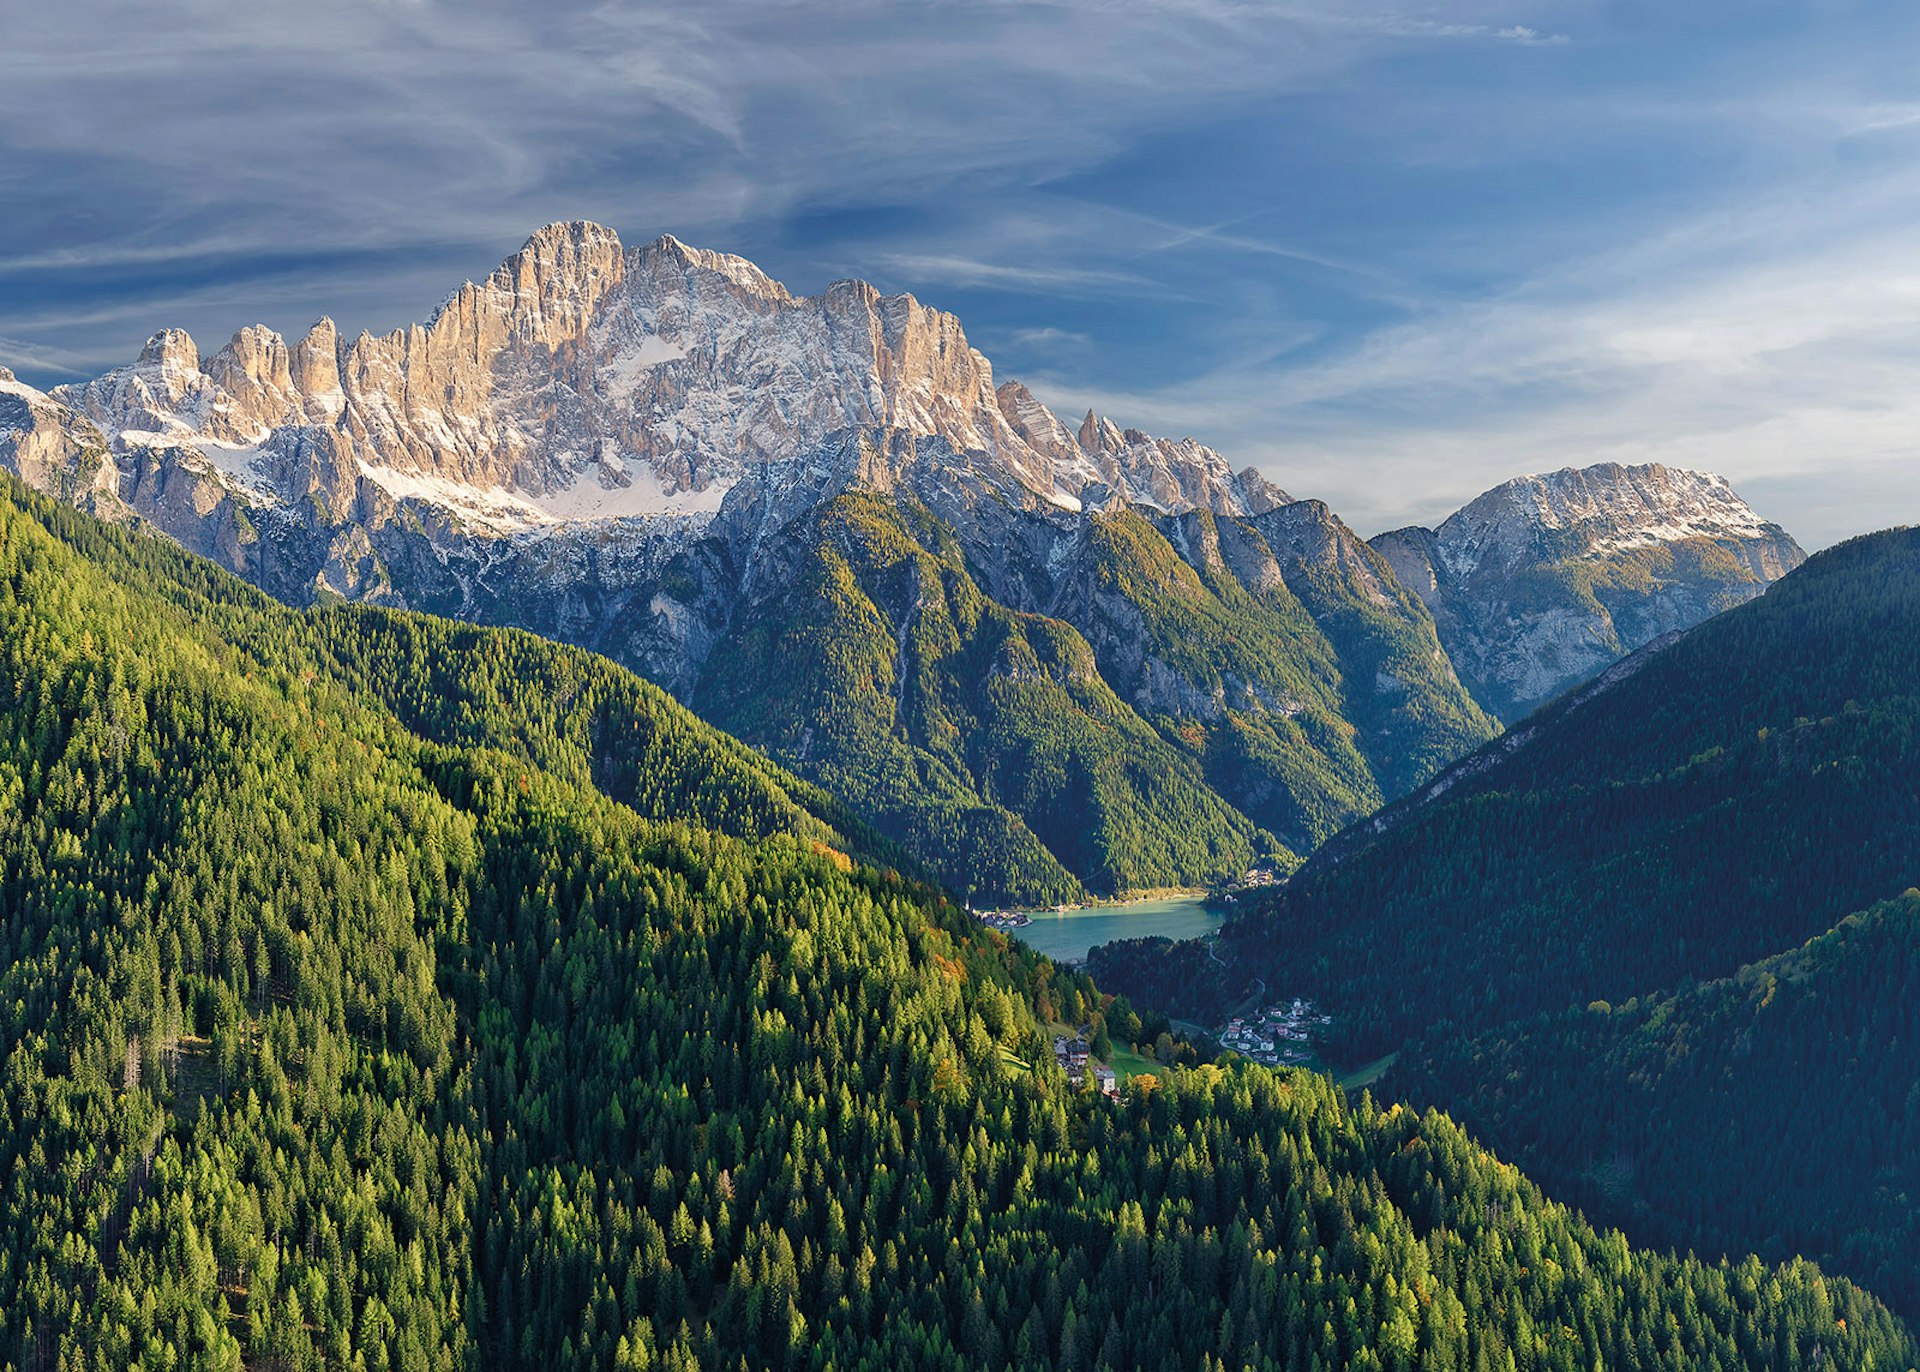 The lakeside village of Alleghe dwarfed by Monte Civetta © Alberto Simonetti / Getty Images